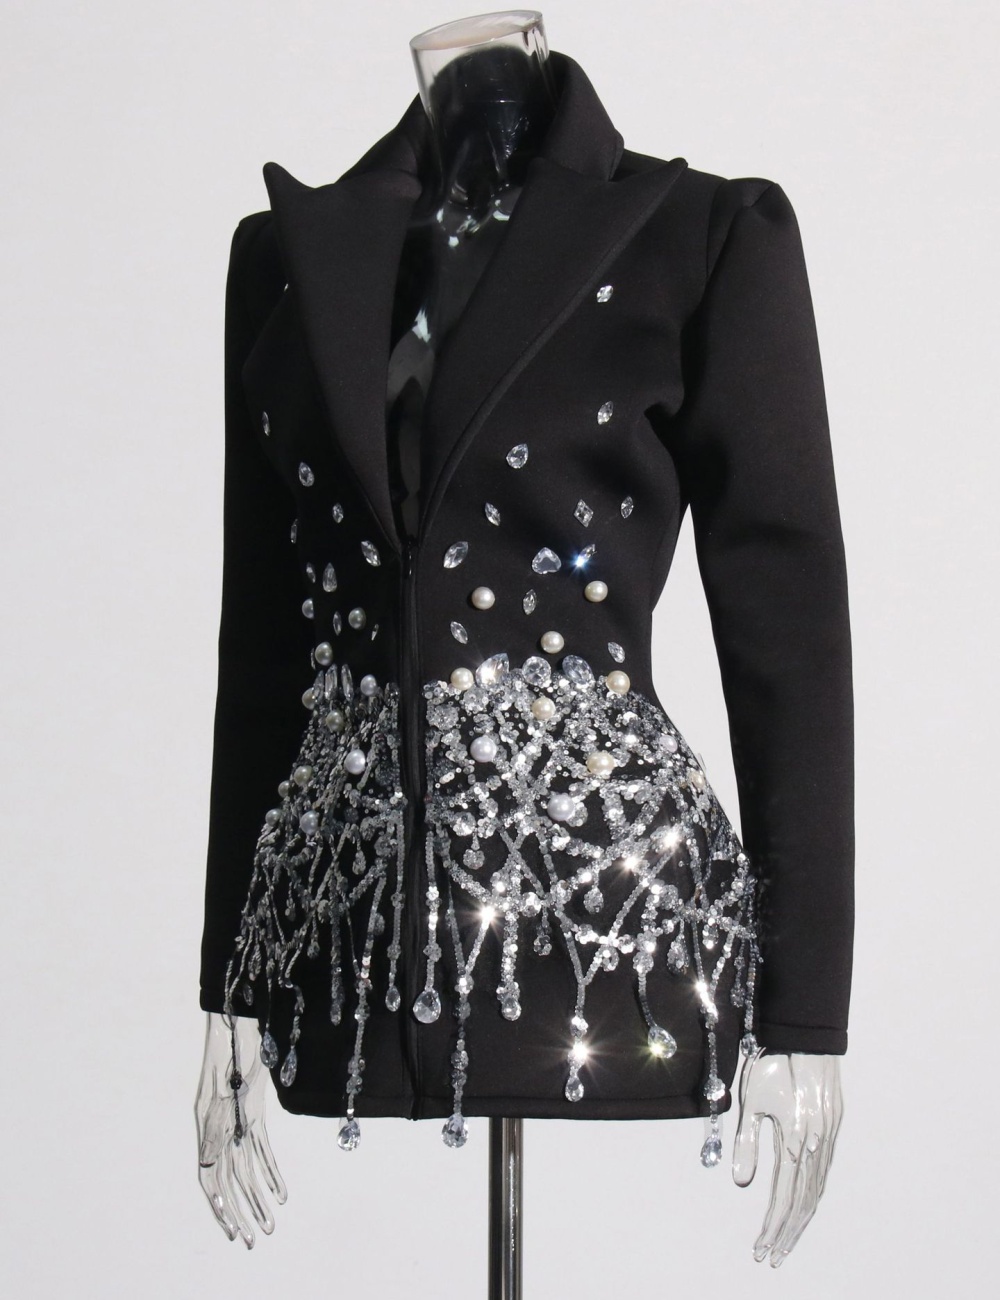 Spring splice dress elegant sequins business suit for women